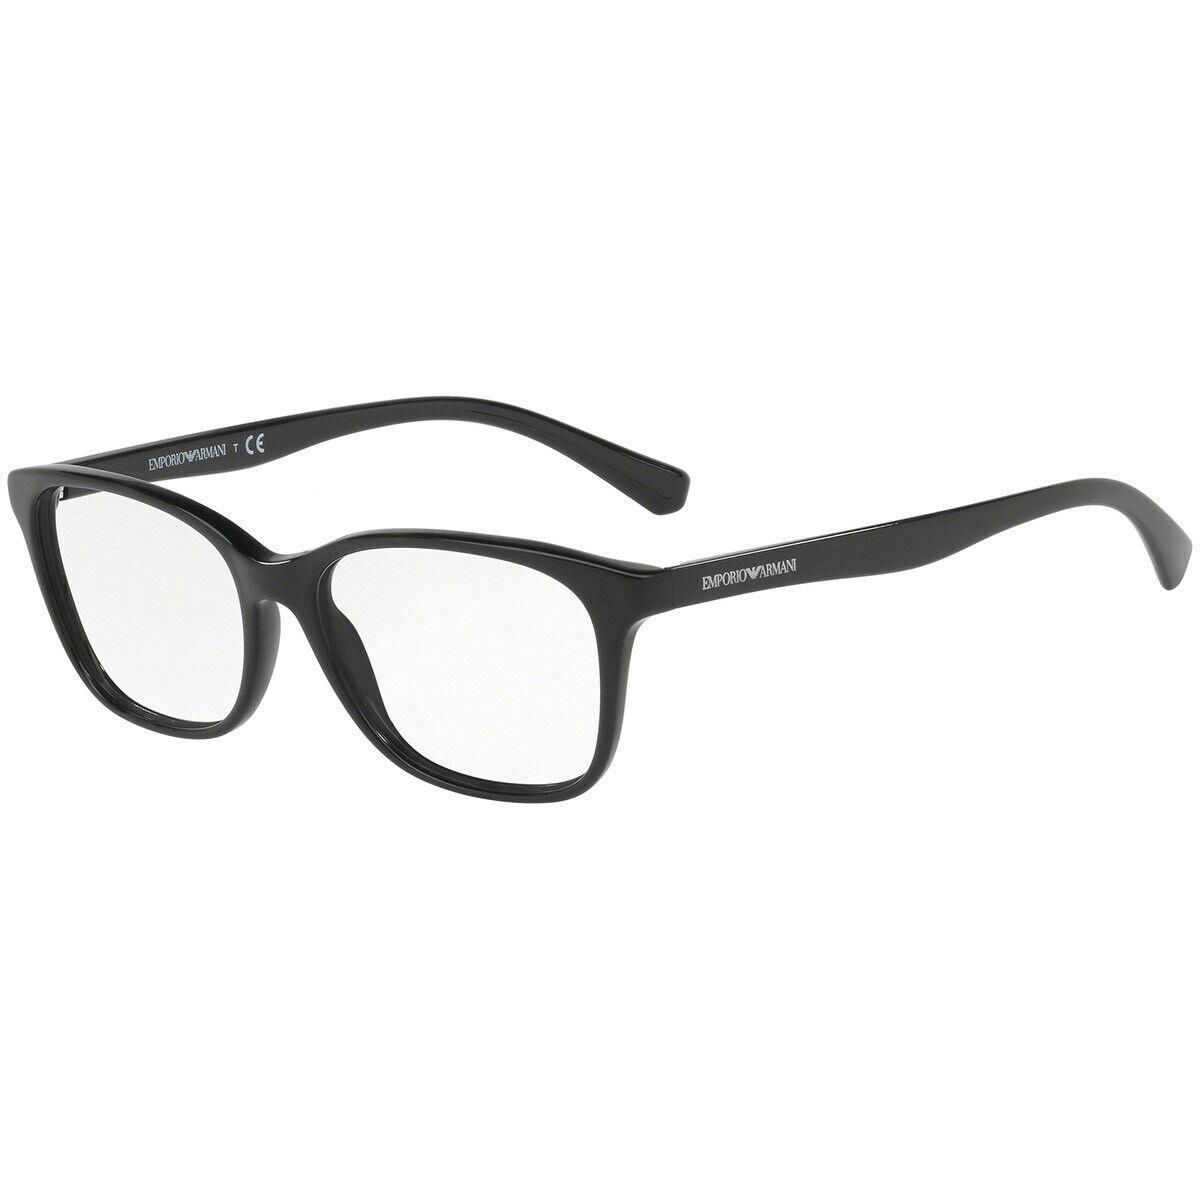 Emporio Armani Eyeglasses EA 3126 5001 Black W/ Demo Lens 52 MM